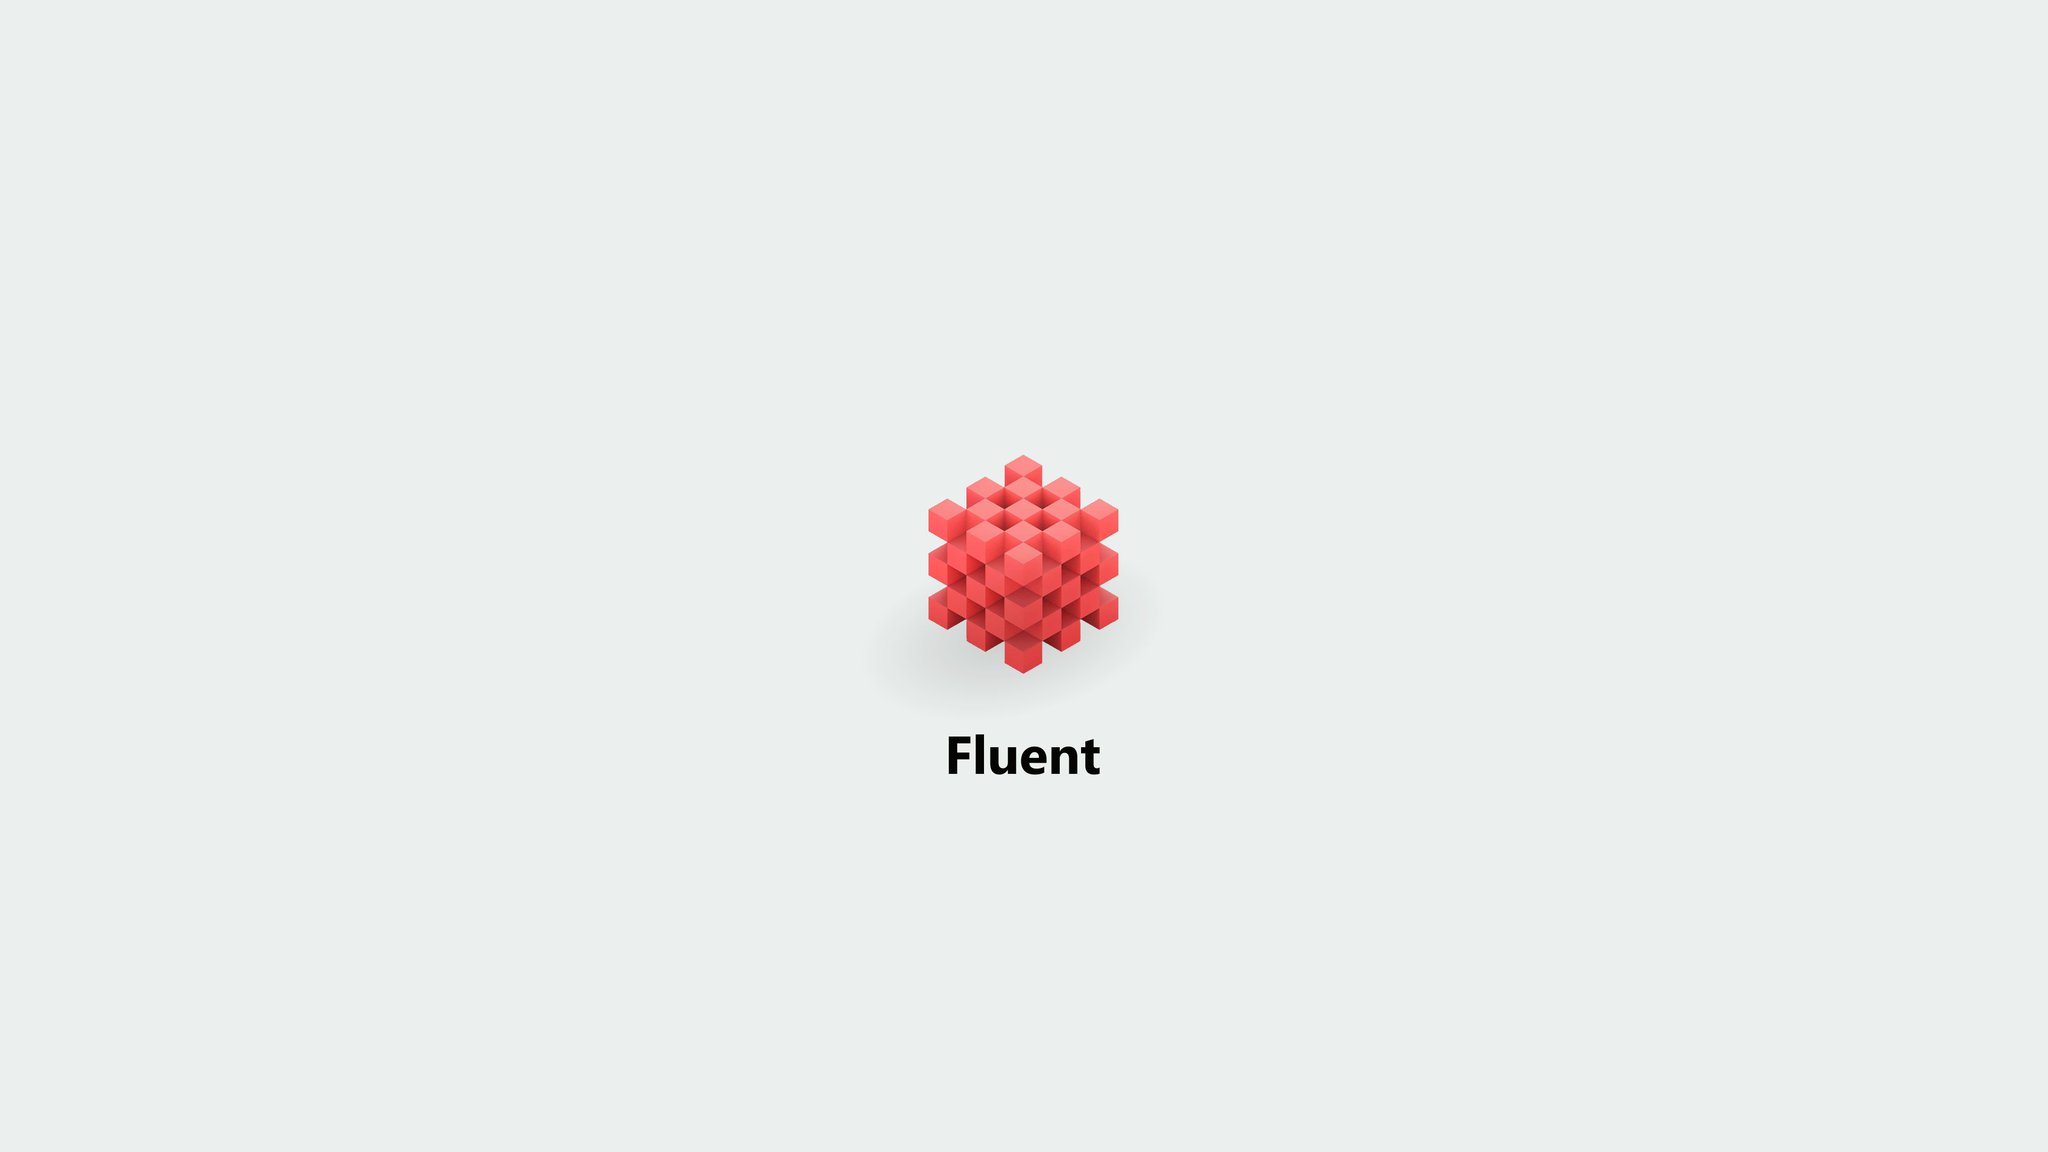 Michael Gillett lóri Twitter: "Here are some #FluentDesign inspired wa...